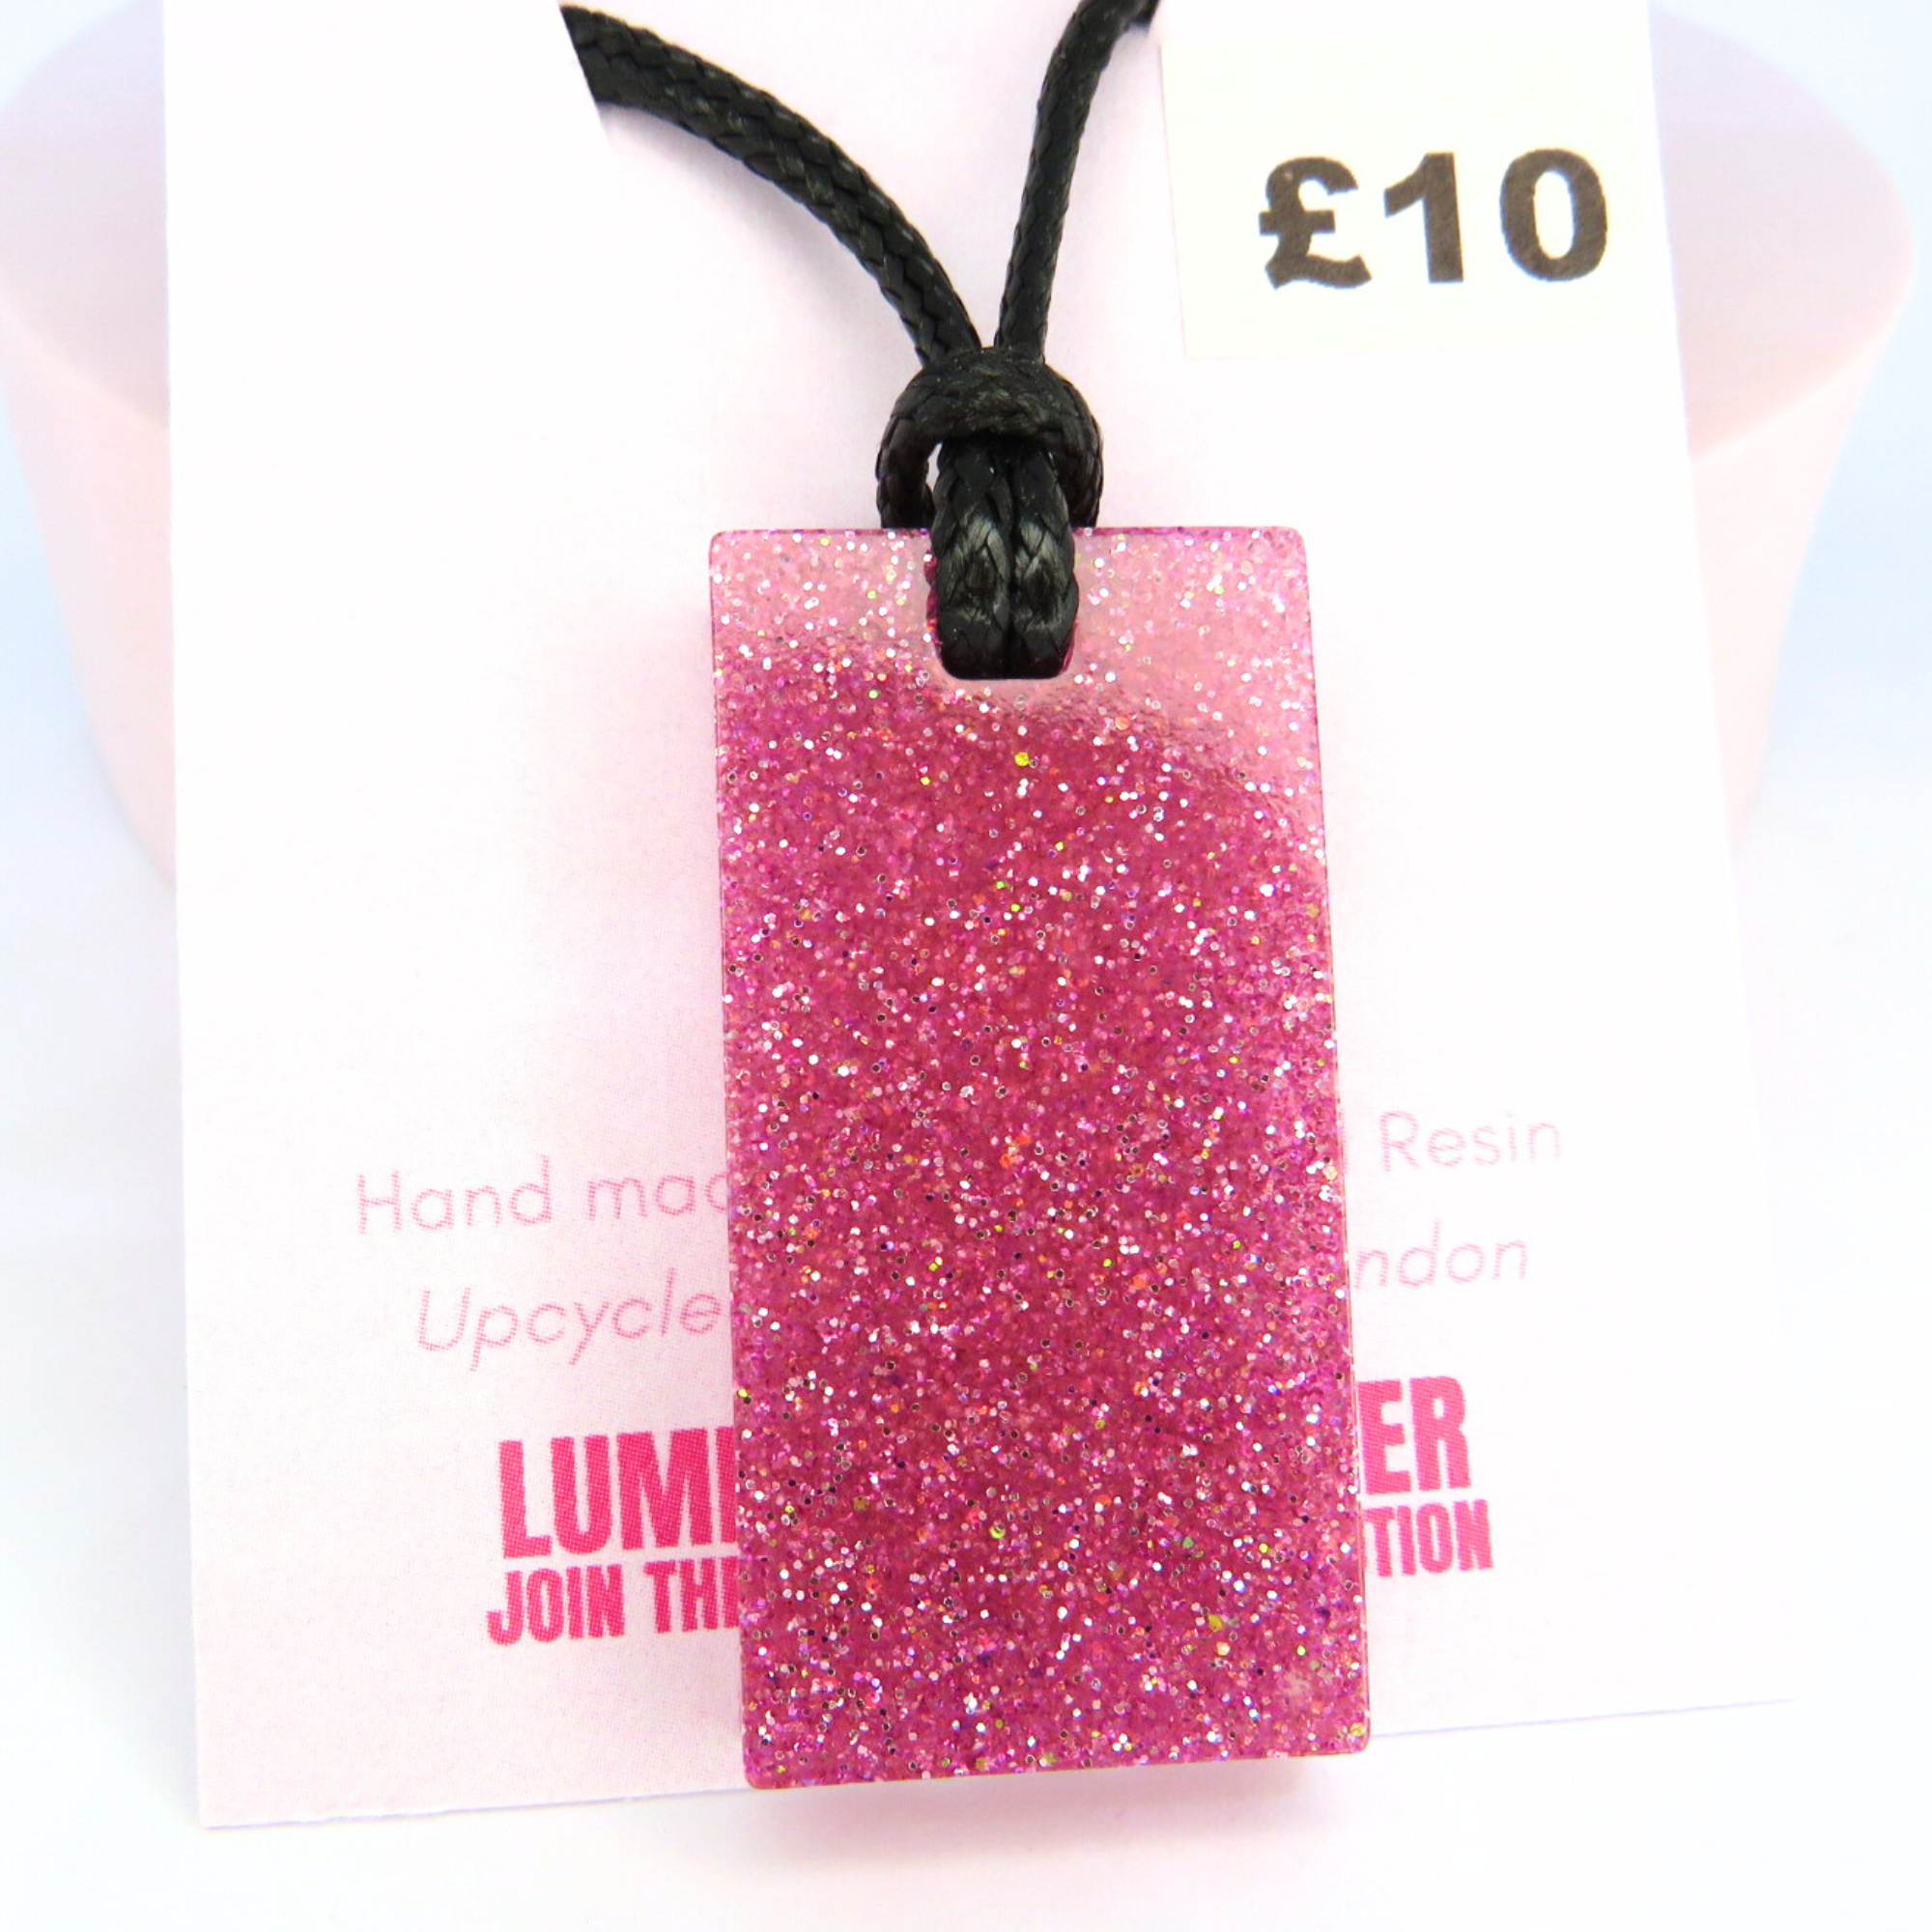 Glitter Necklace - Blush Pink